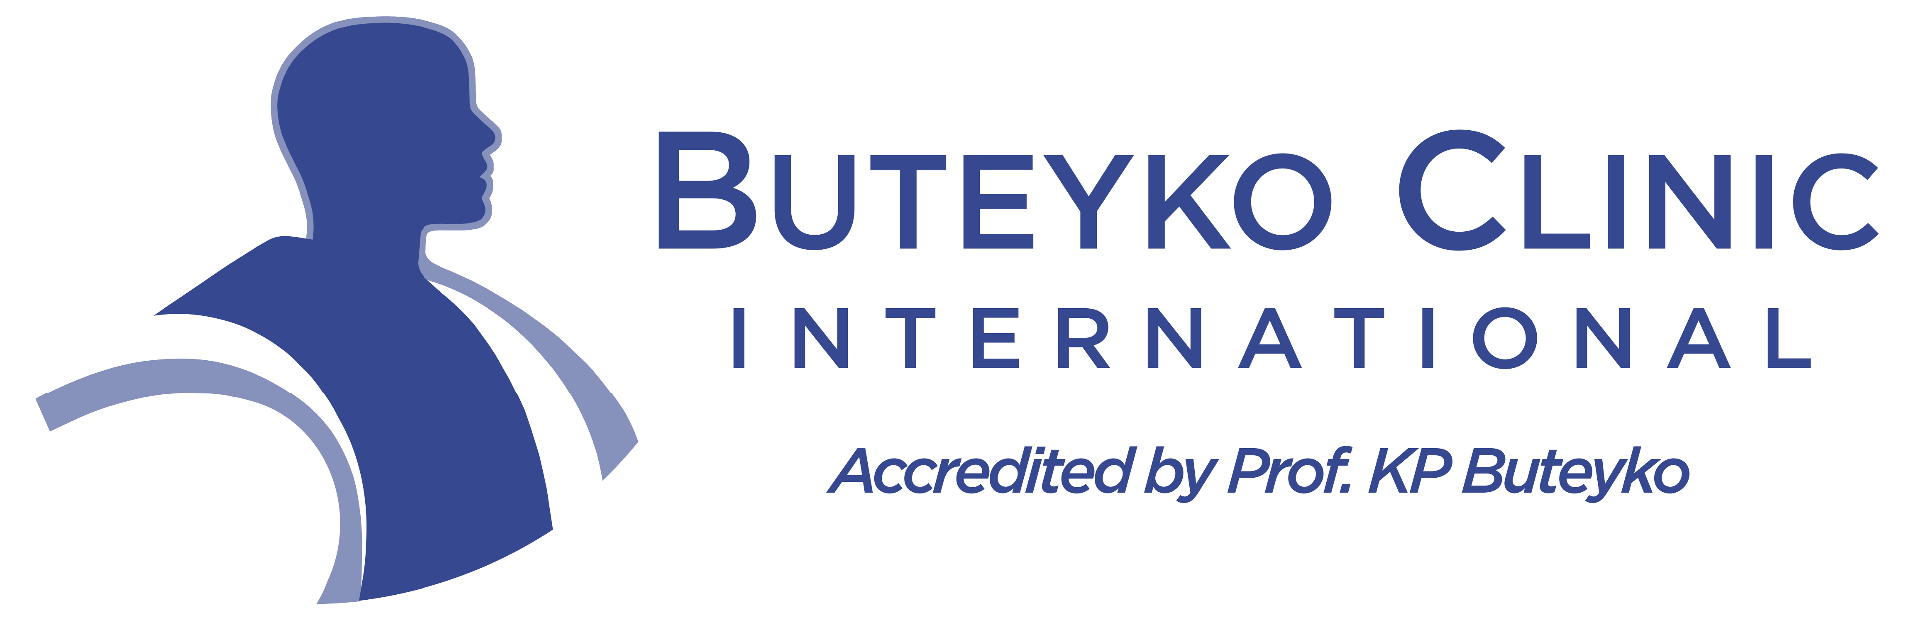 Buteyko Clinic logo